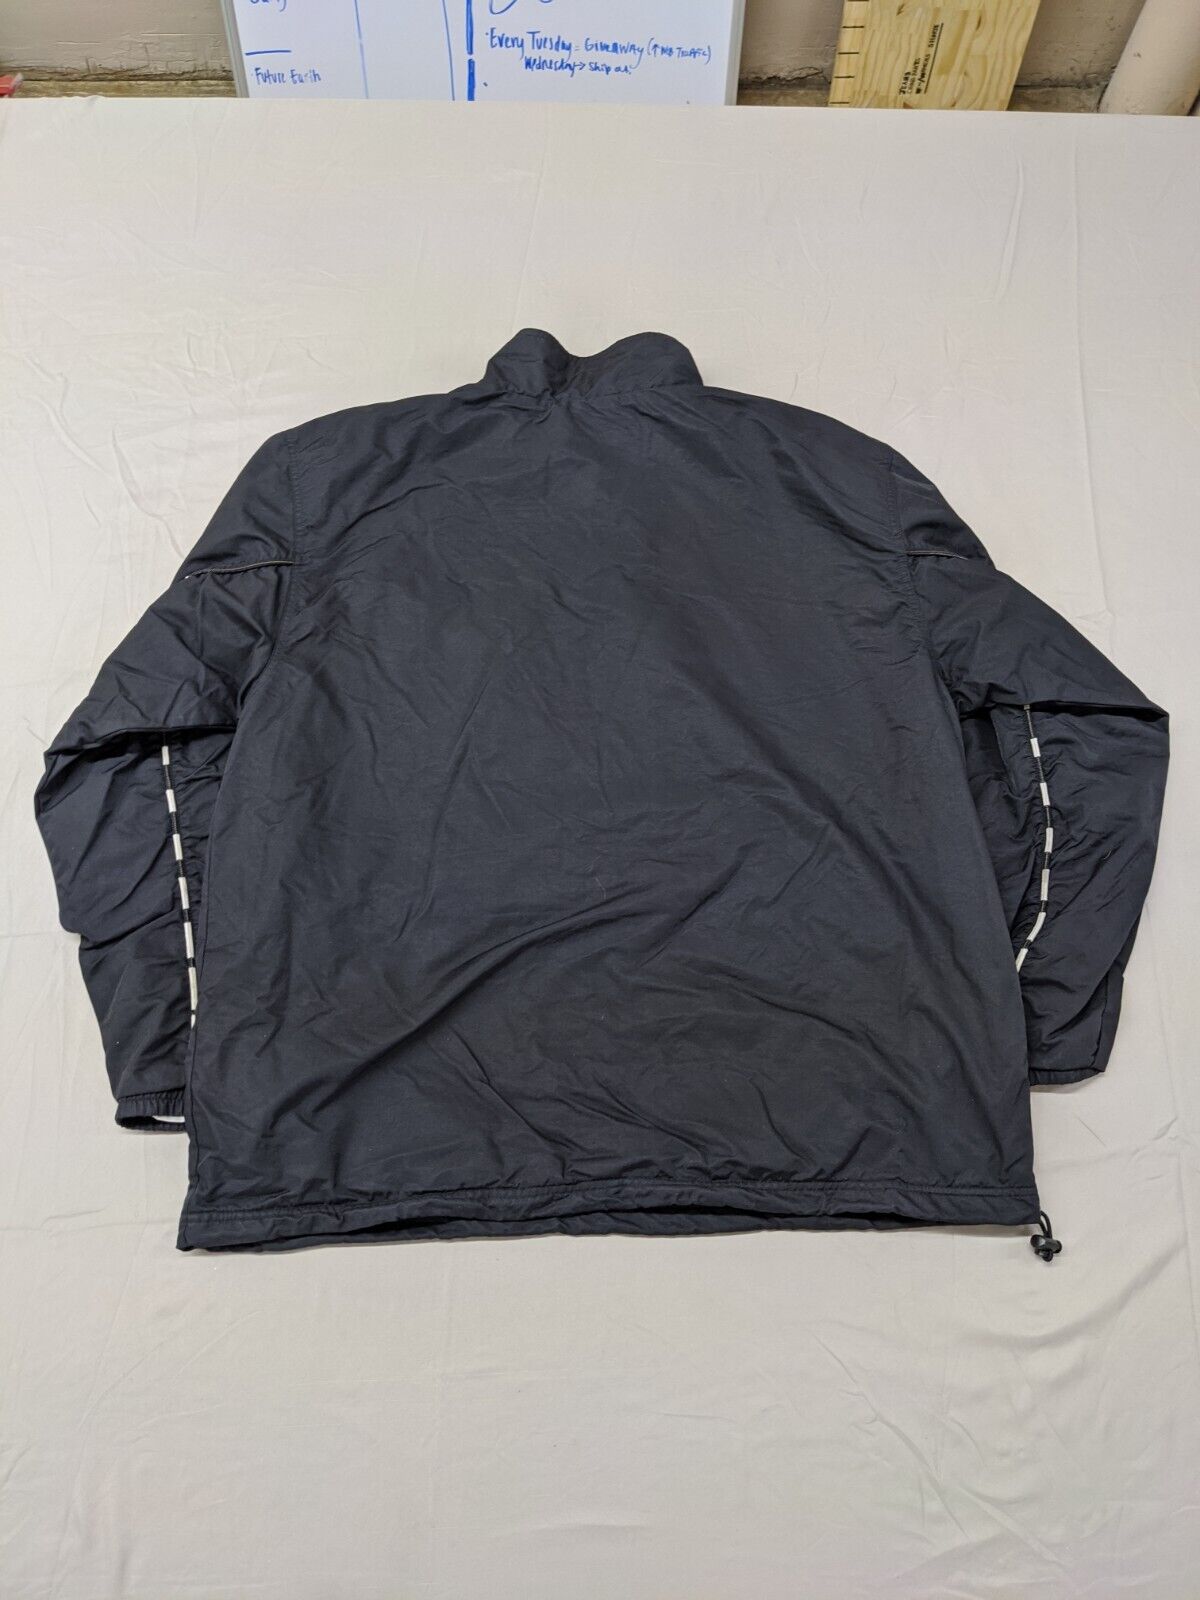 Adidas Men's Windbreaker Pullover Sweatshirt Lightweight Athletic Black Size XL